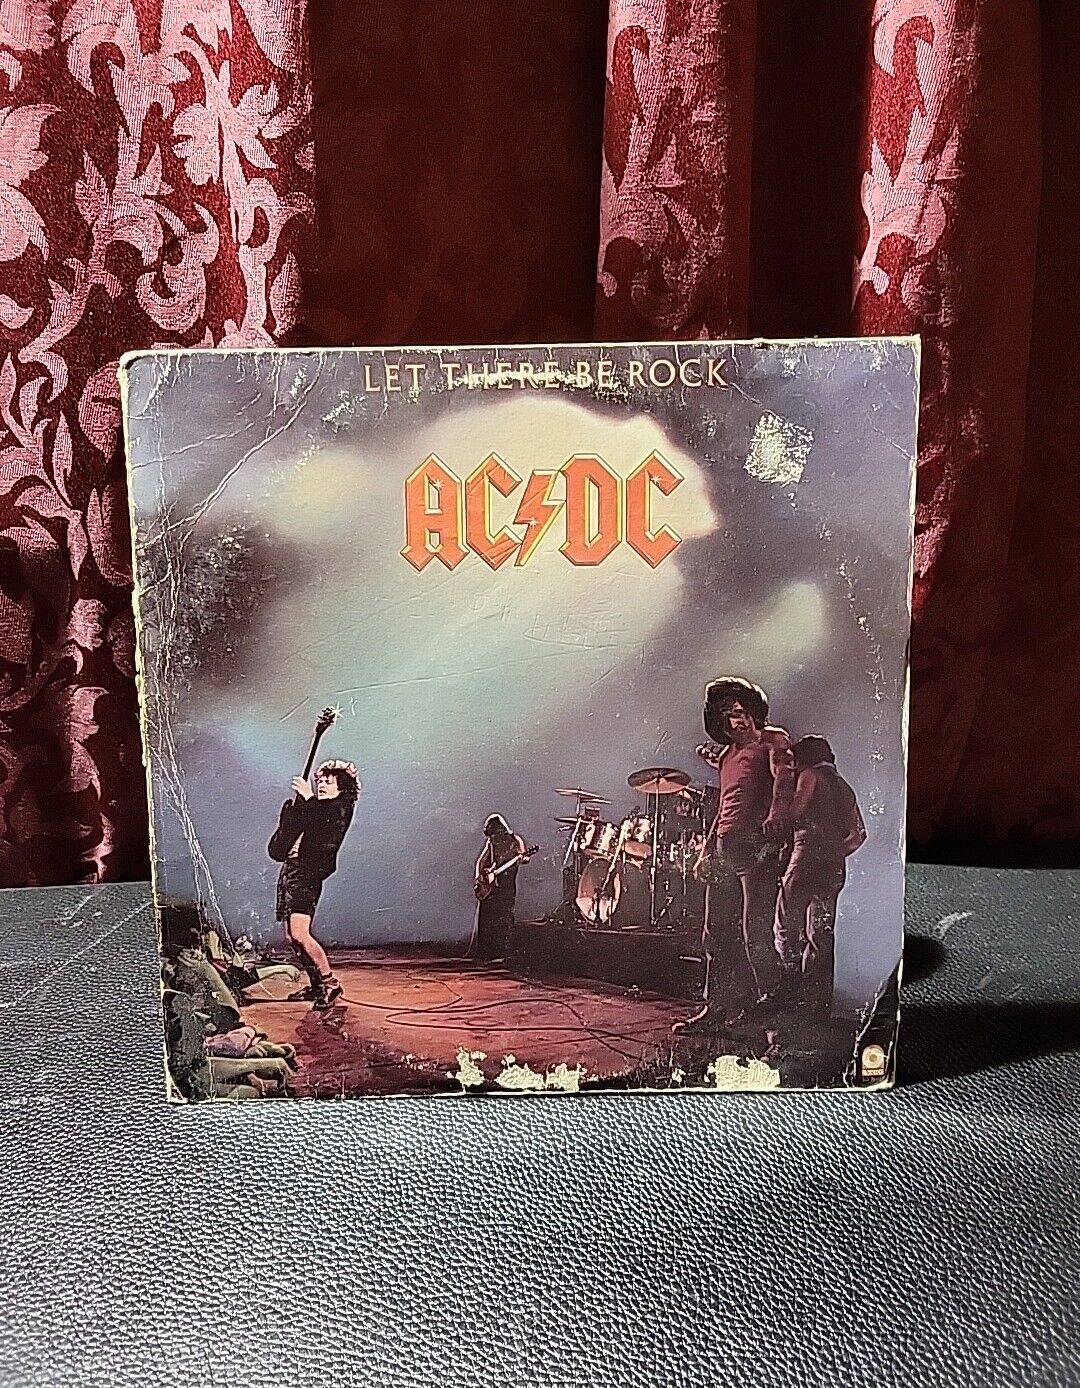 AC/DC LET THERE BE ROCK SD36-151 Vintage Original 1977 ATCO Vinyl LP Album